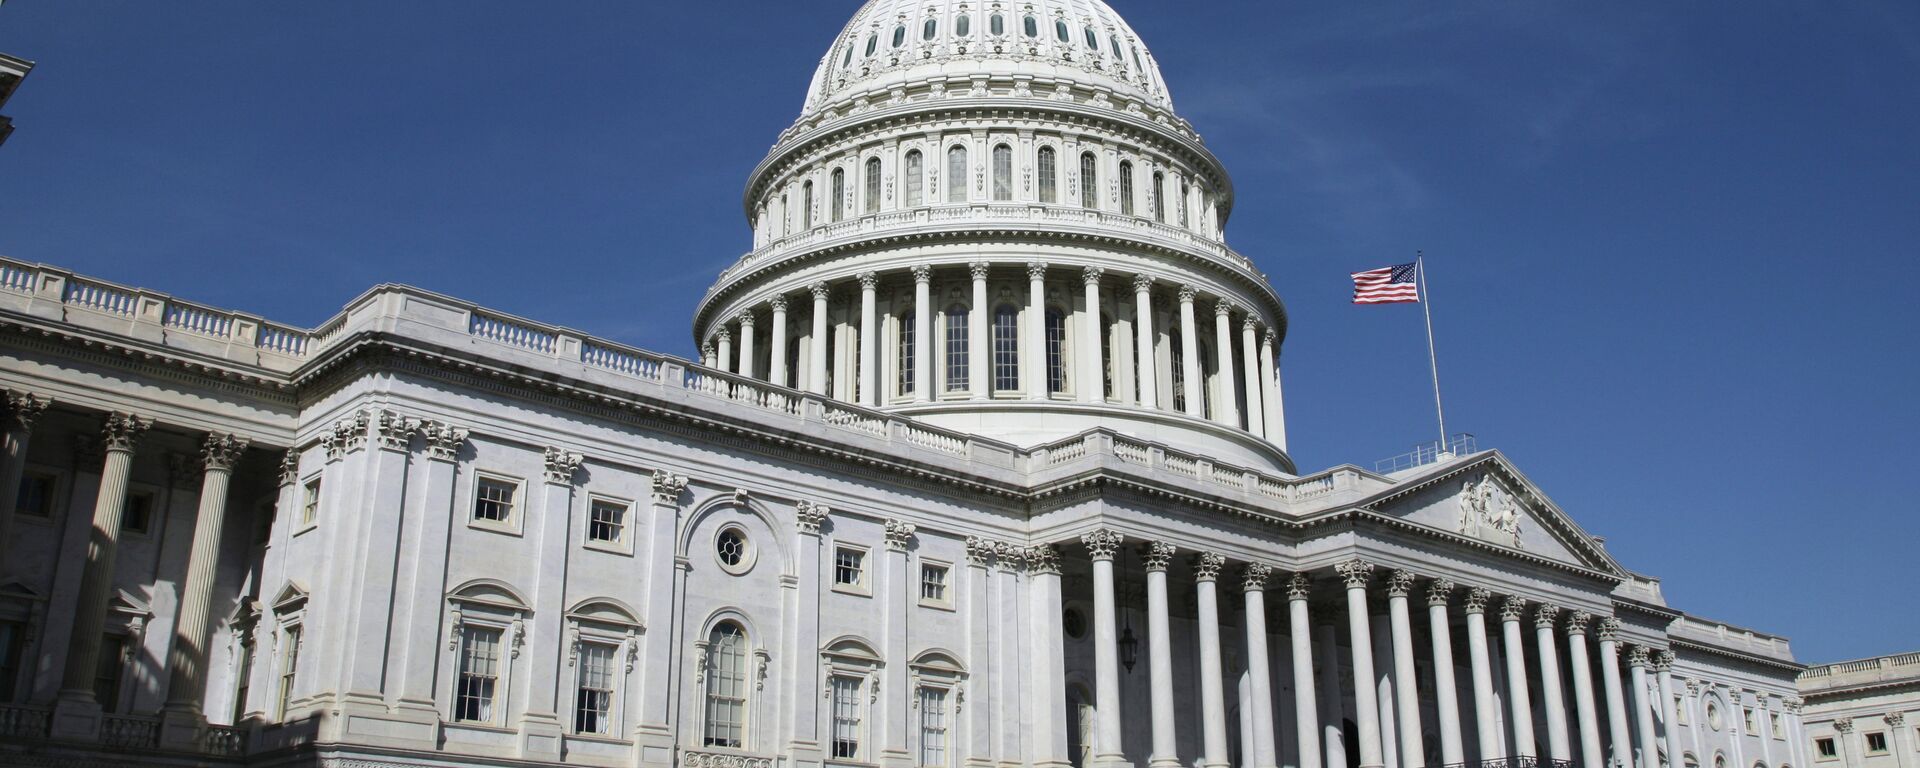 Капитолий (United States Capitol) на Капитолийском холме в Вашингтоне - Sputnik Узбекистан, 1920, 20.03.2021